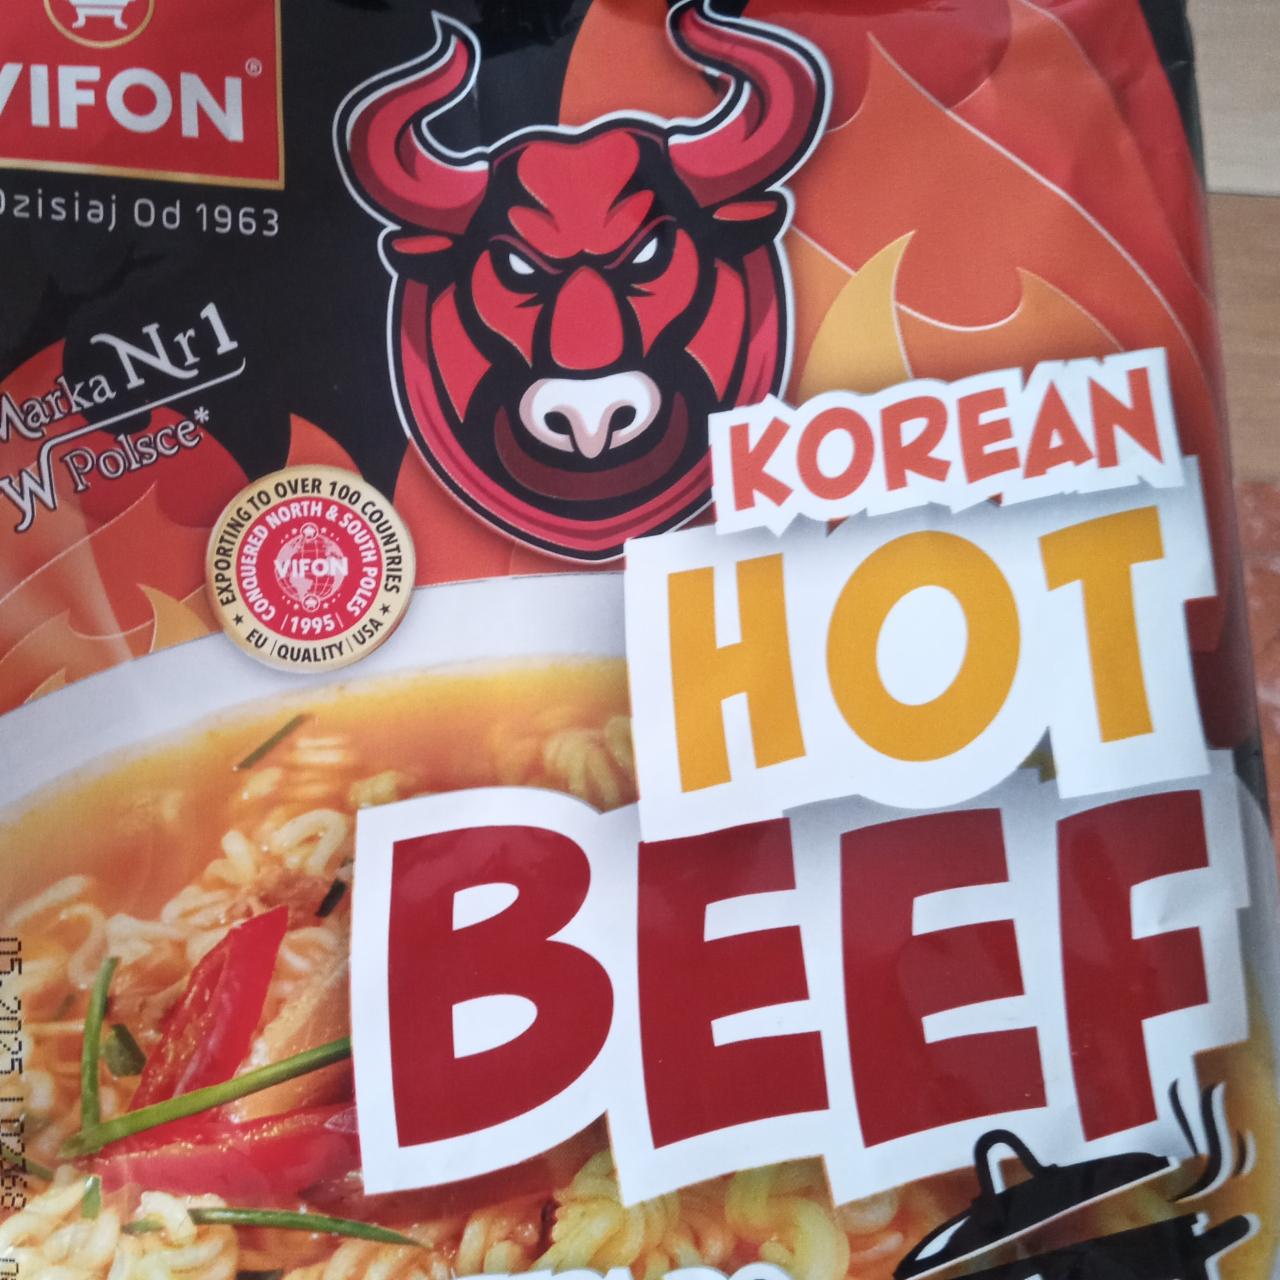 Zdjęcia - Korean Hot Beef Vifon